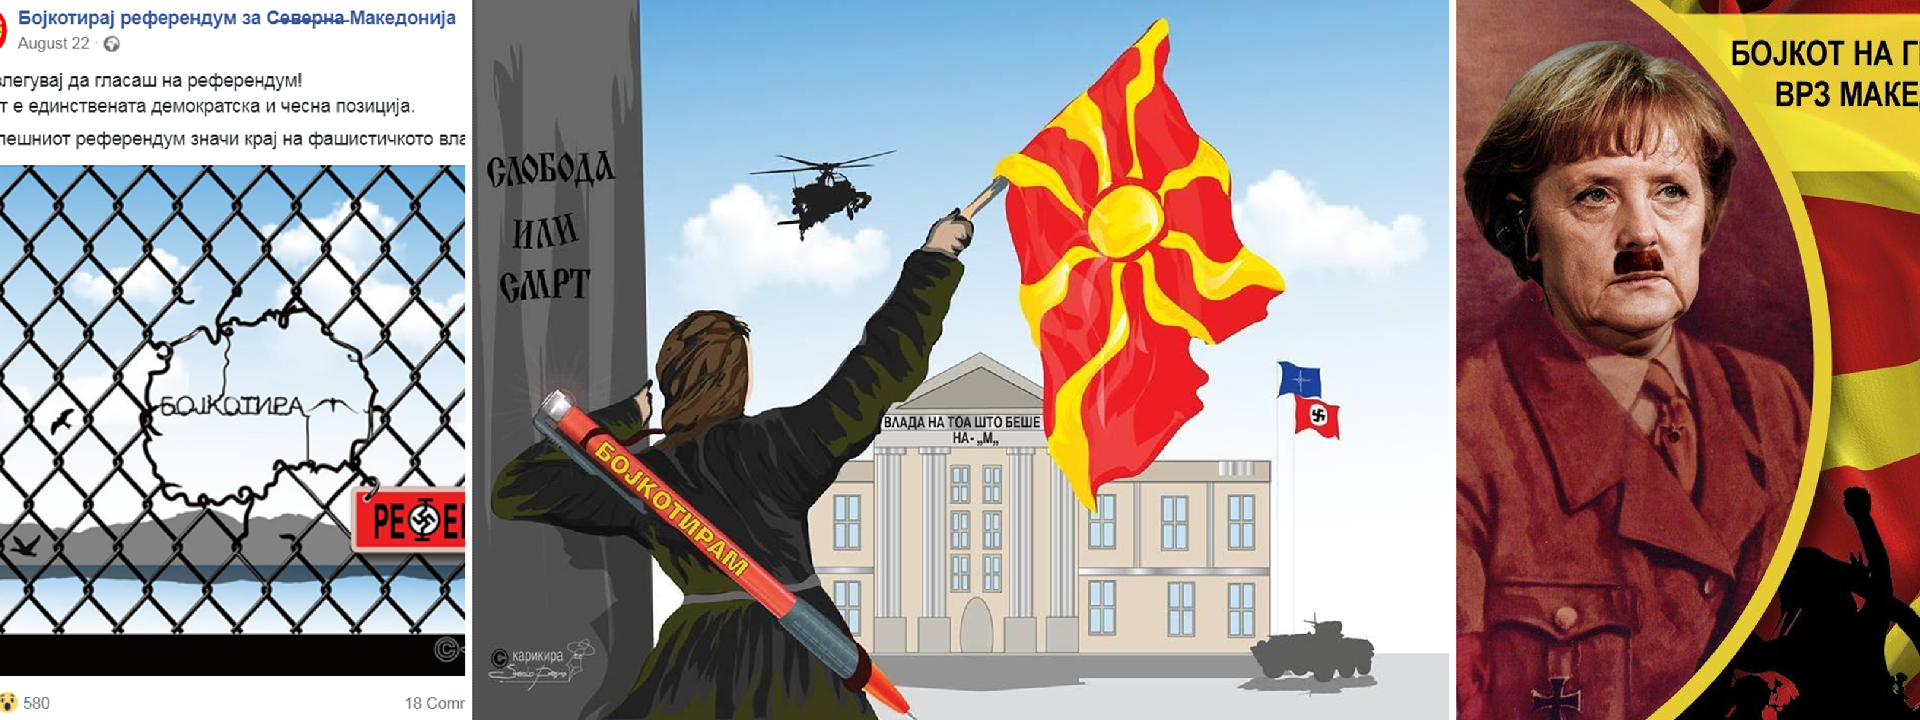 #ElectionWatch: Fascist Falsification Ahead of Macedonian Referendum